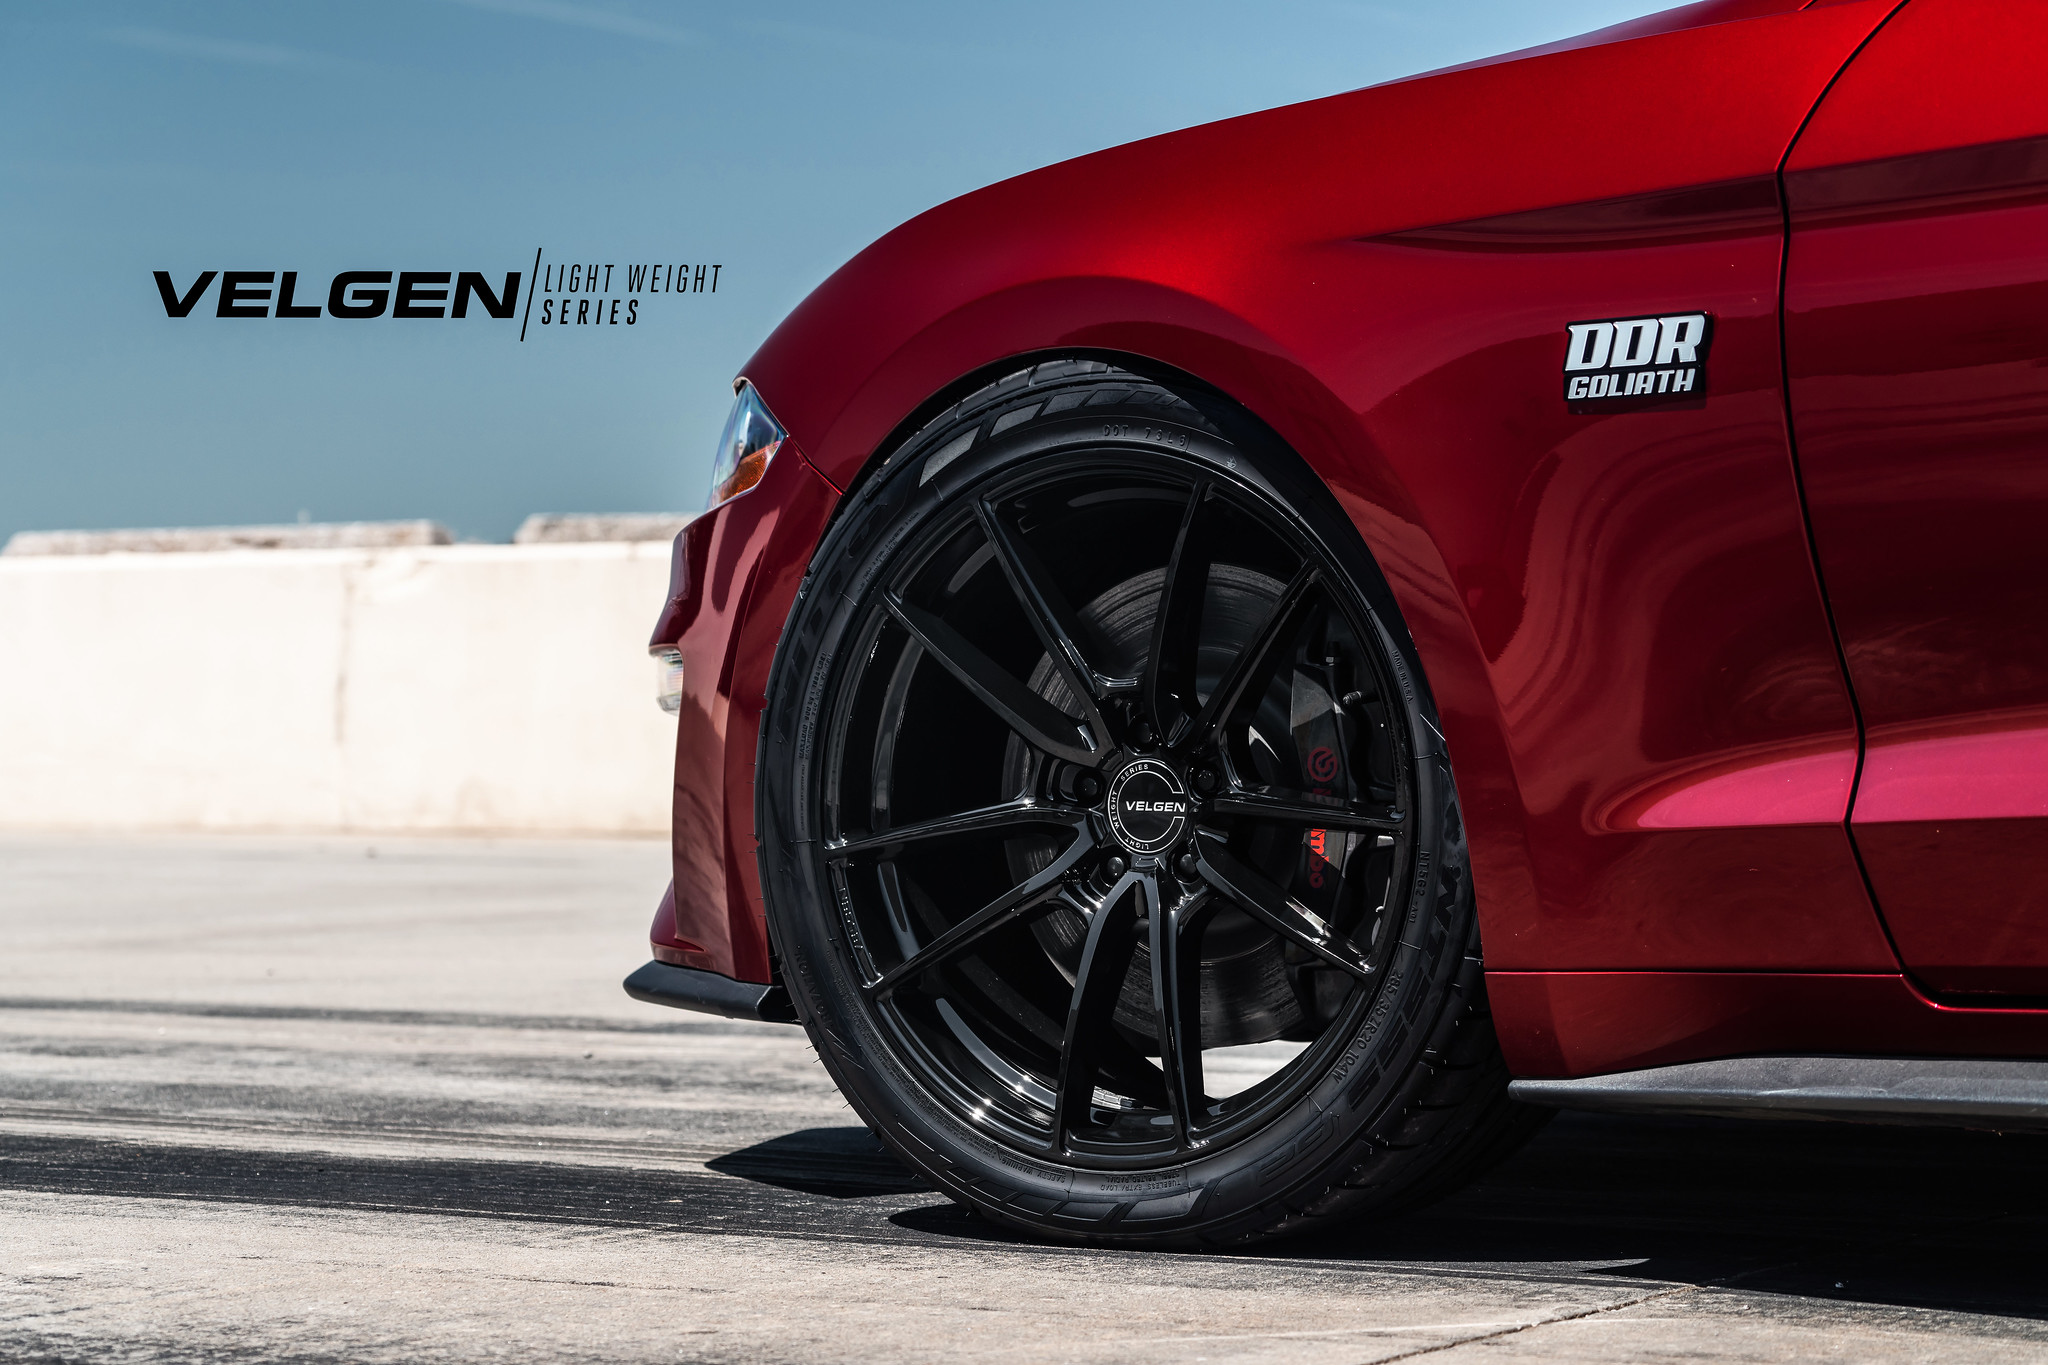 S650 Mustang Velgen wheels for your S650 Mustang | Vibe Motorsports 48233612977_1a398d7540_k